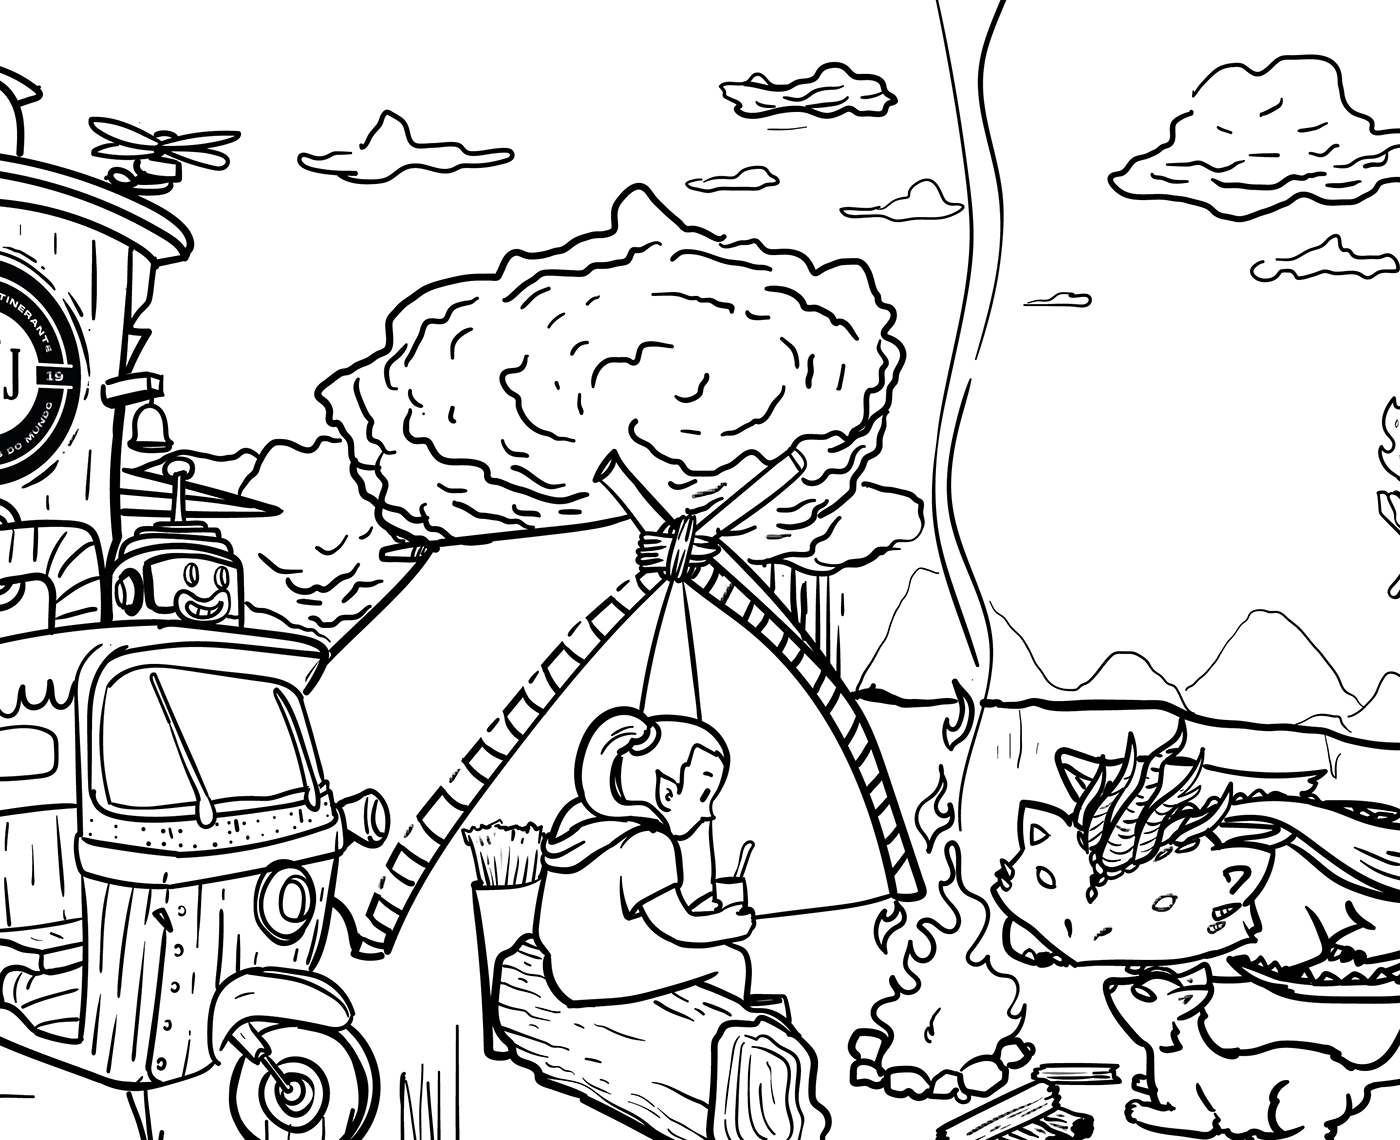 Para colorir Crianças fantasia thiago melo fantasy draw ilustracion